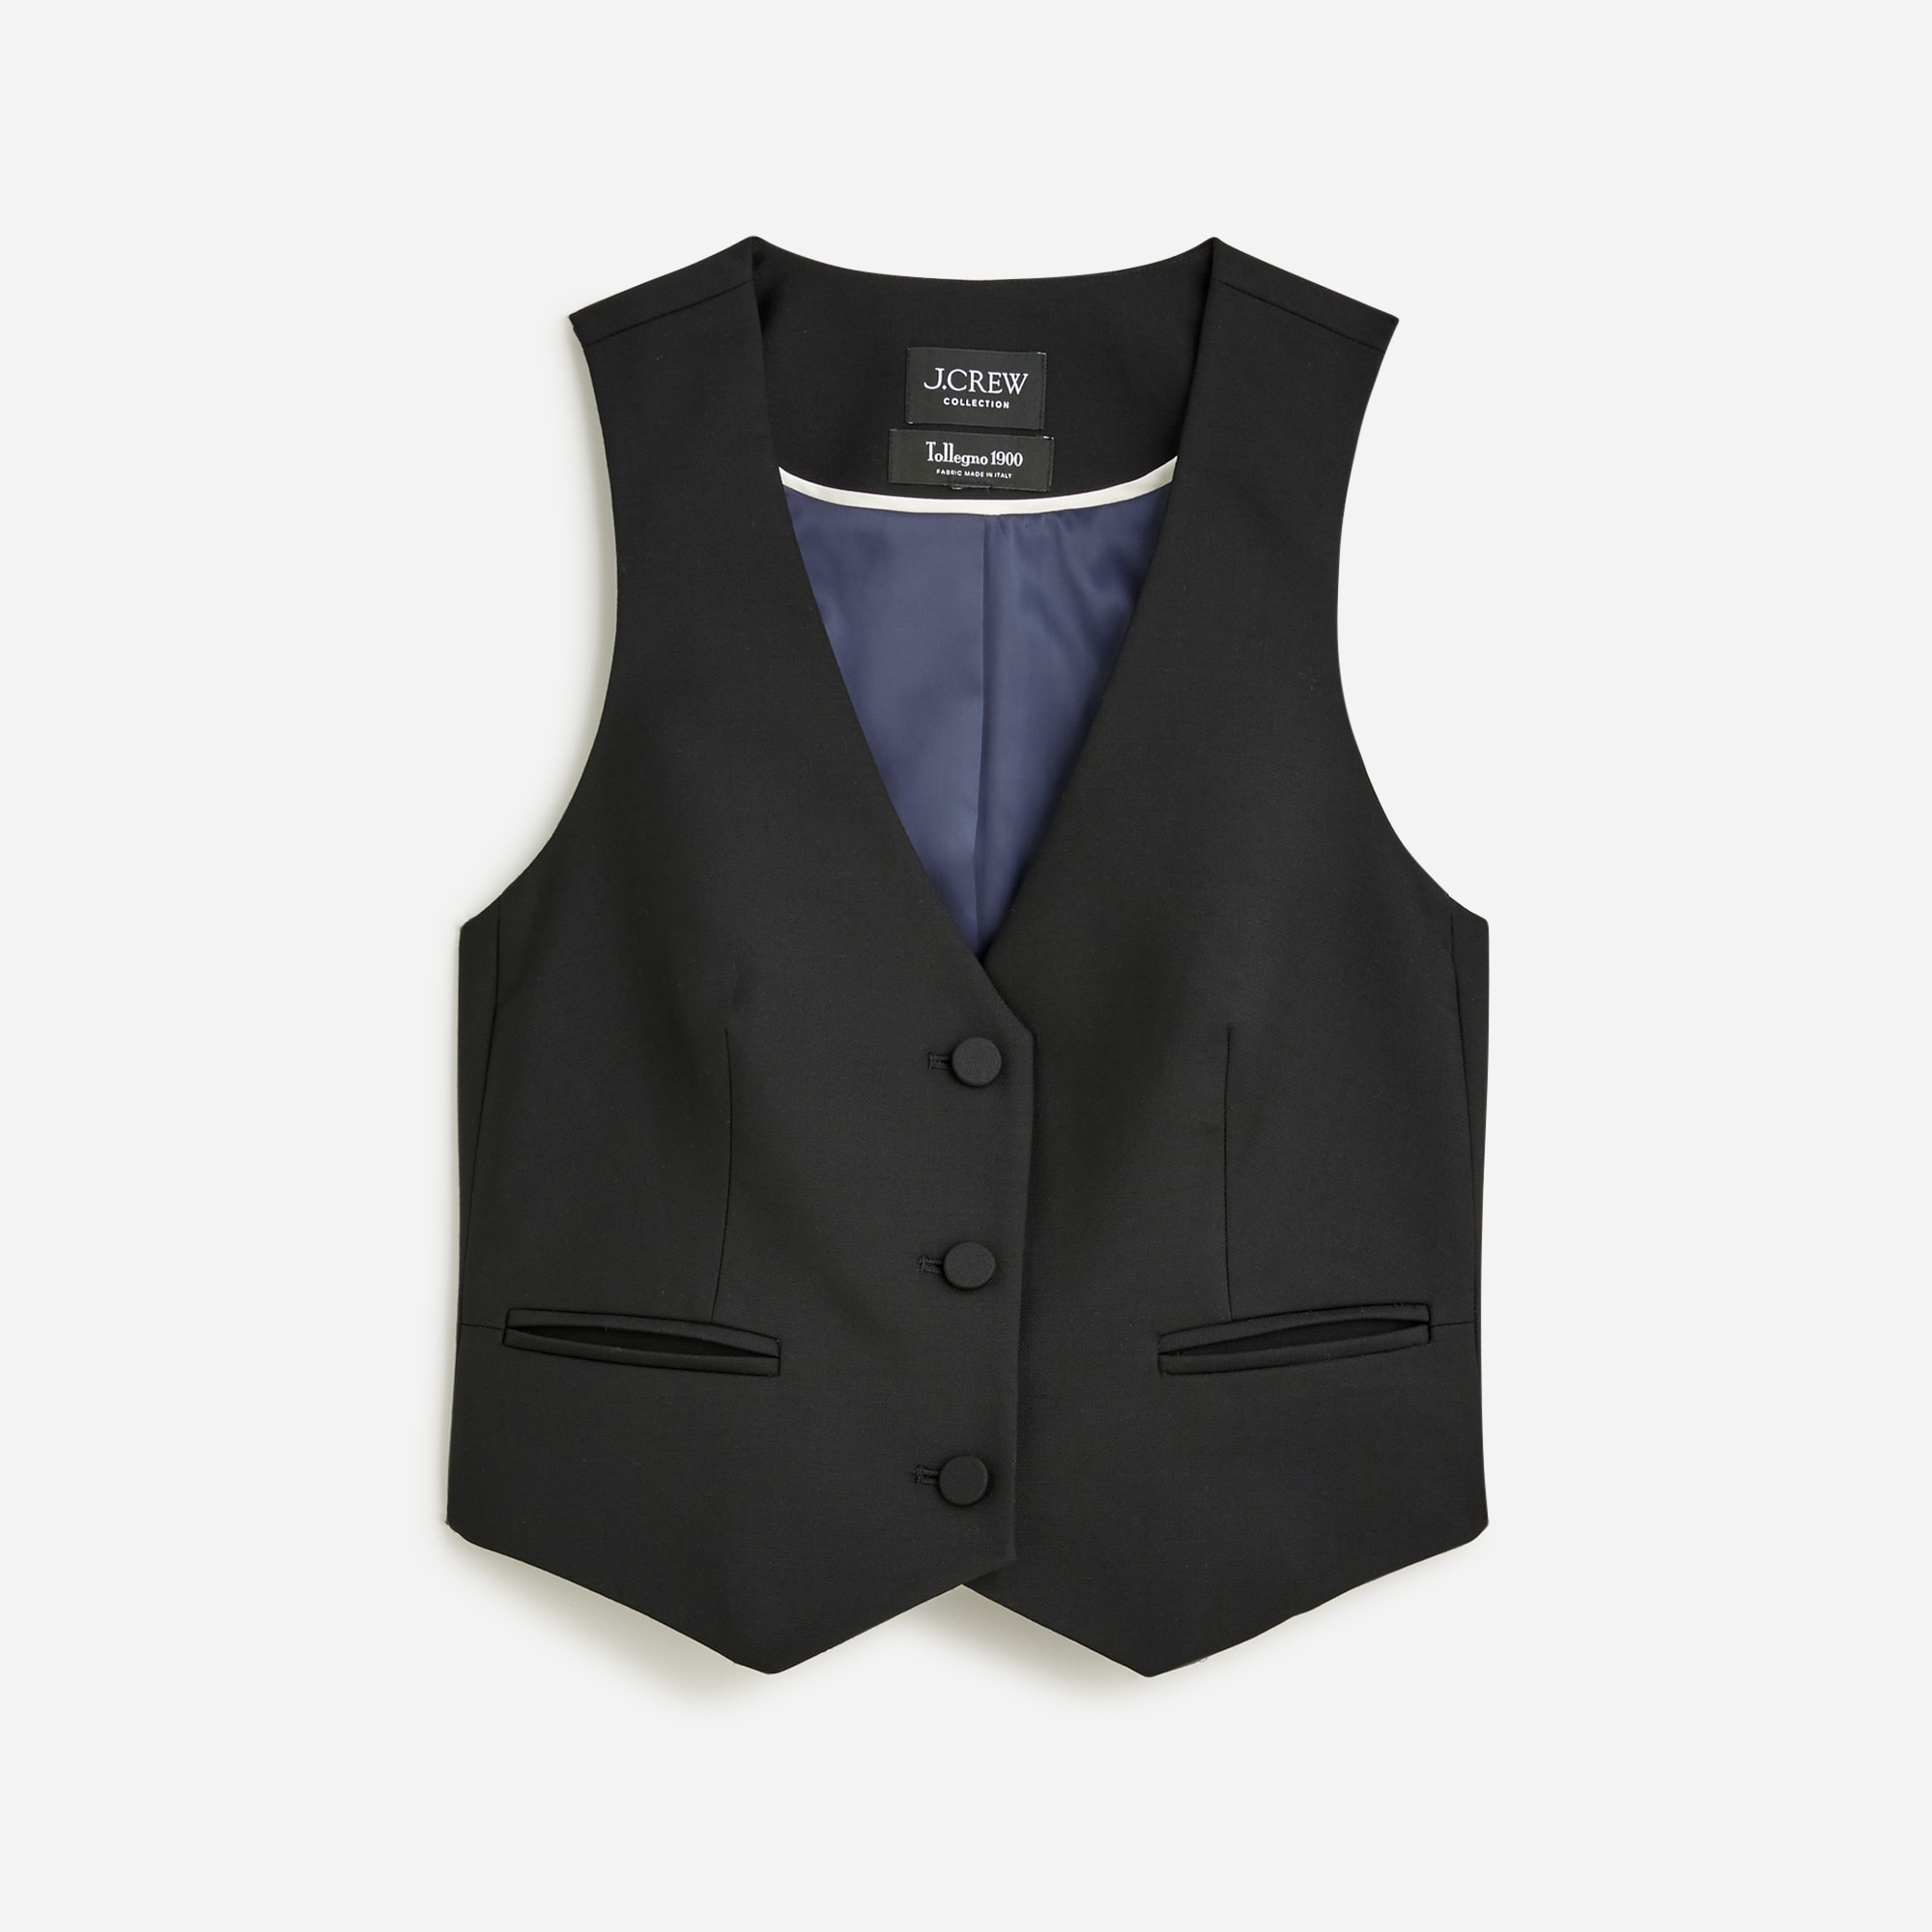  Collection tuxedo vest in Italian wool